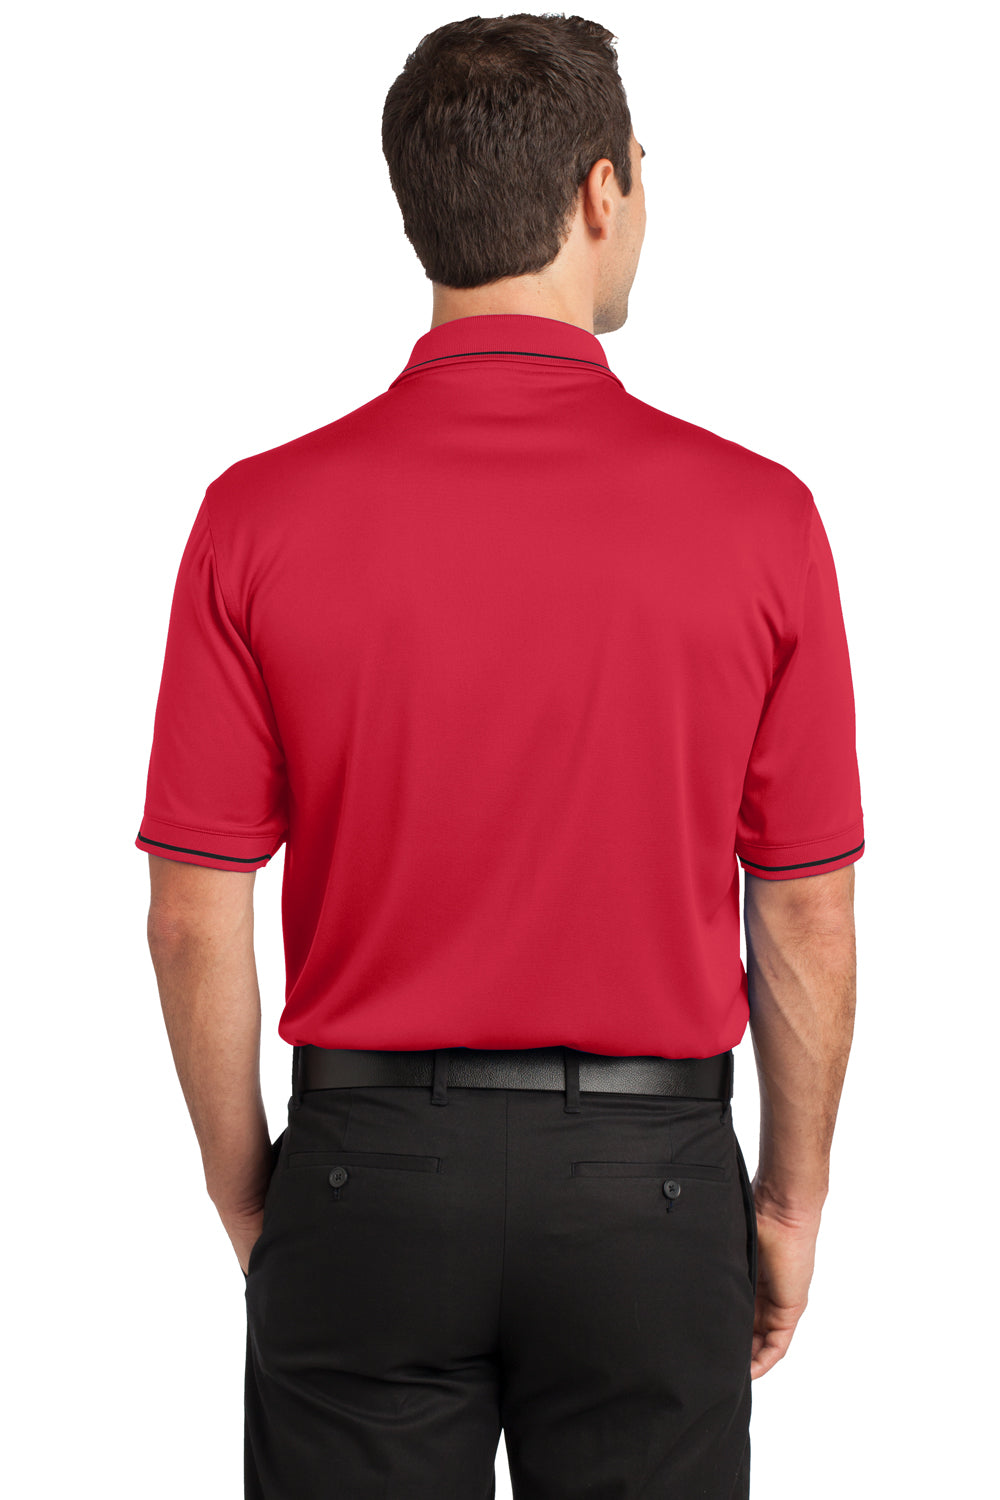 CornerStone CS415 Mens Select Moisture Wicking Short Sleeve Polo Shirt w/ Pocket Red Back